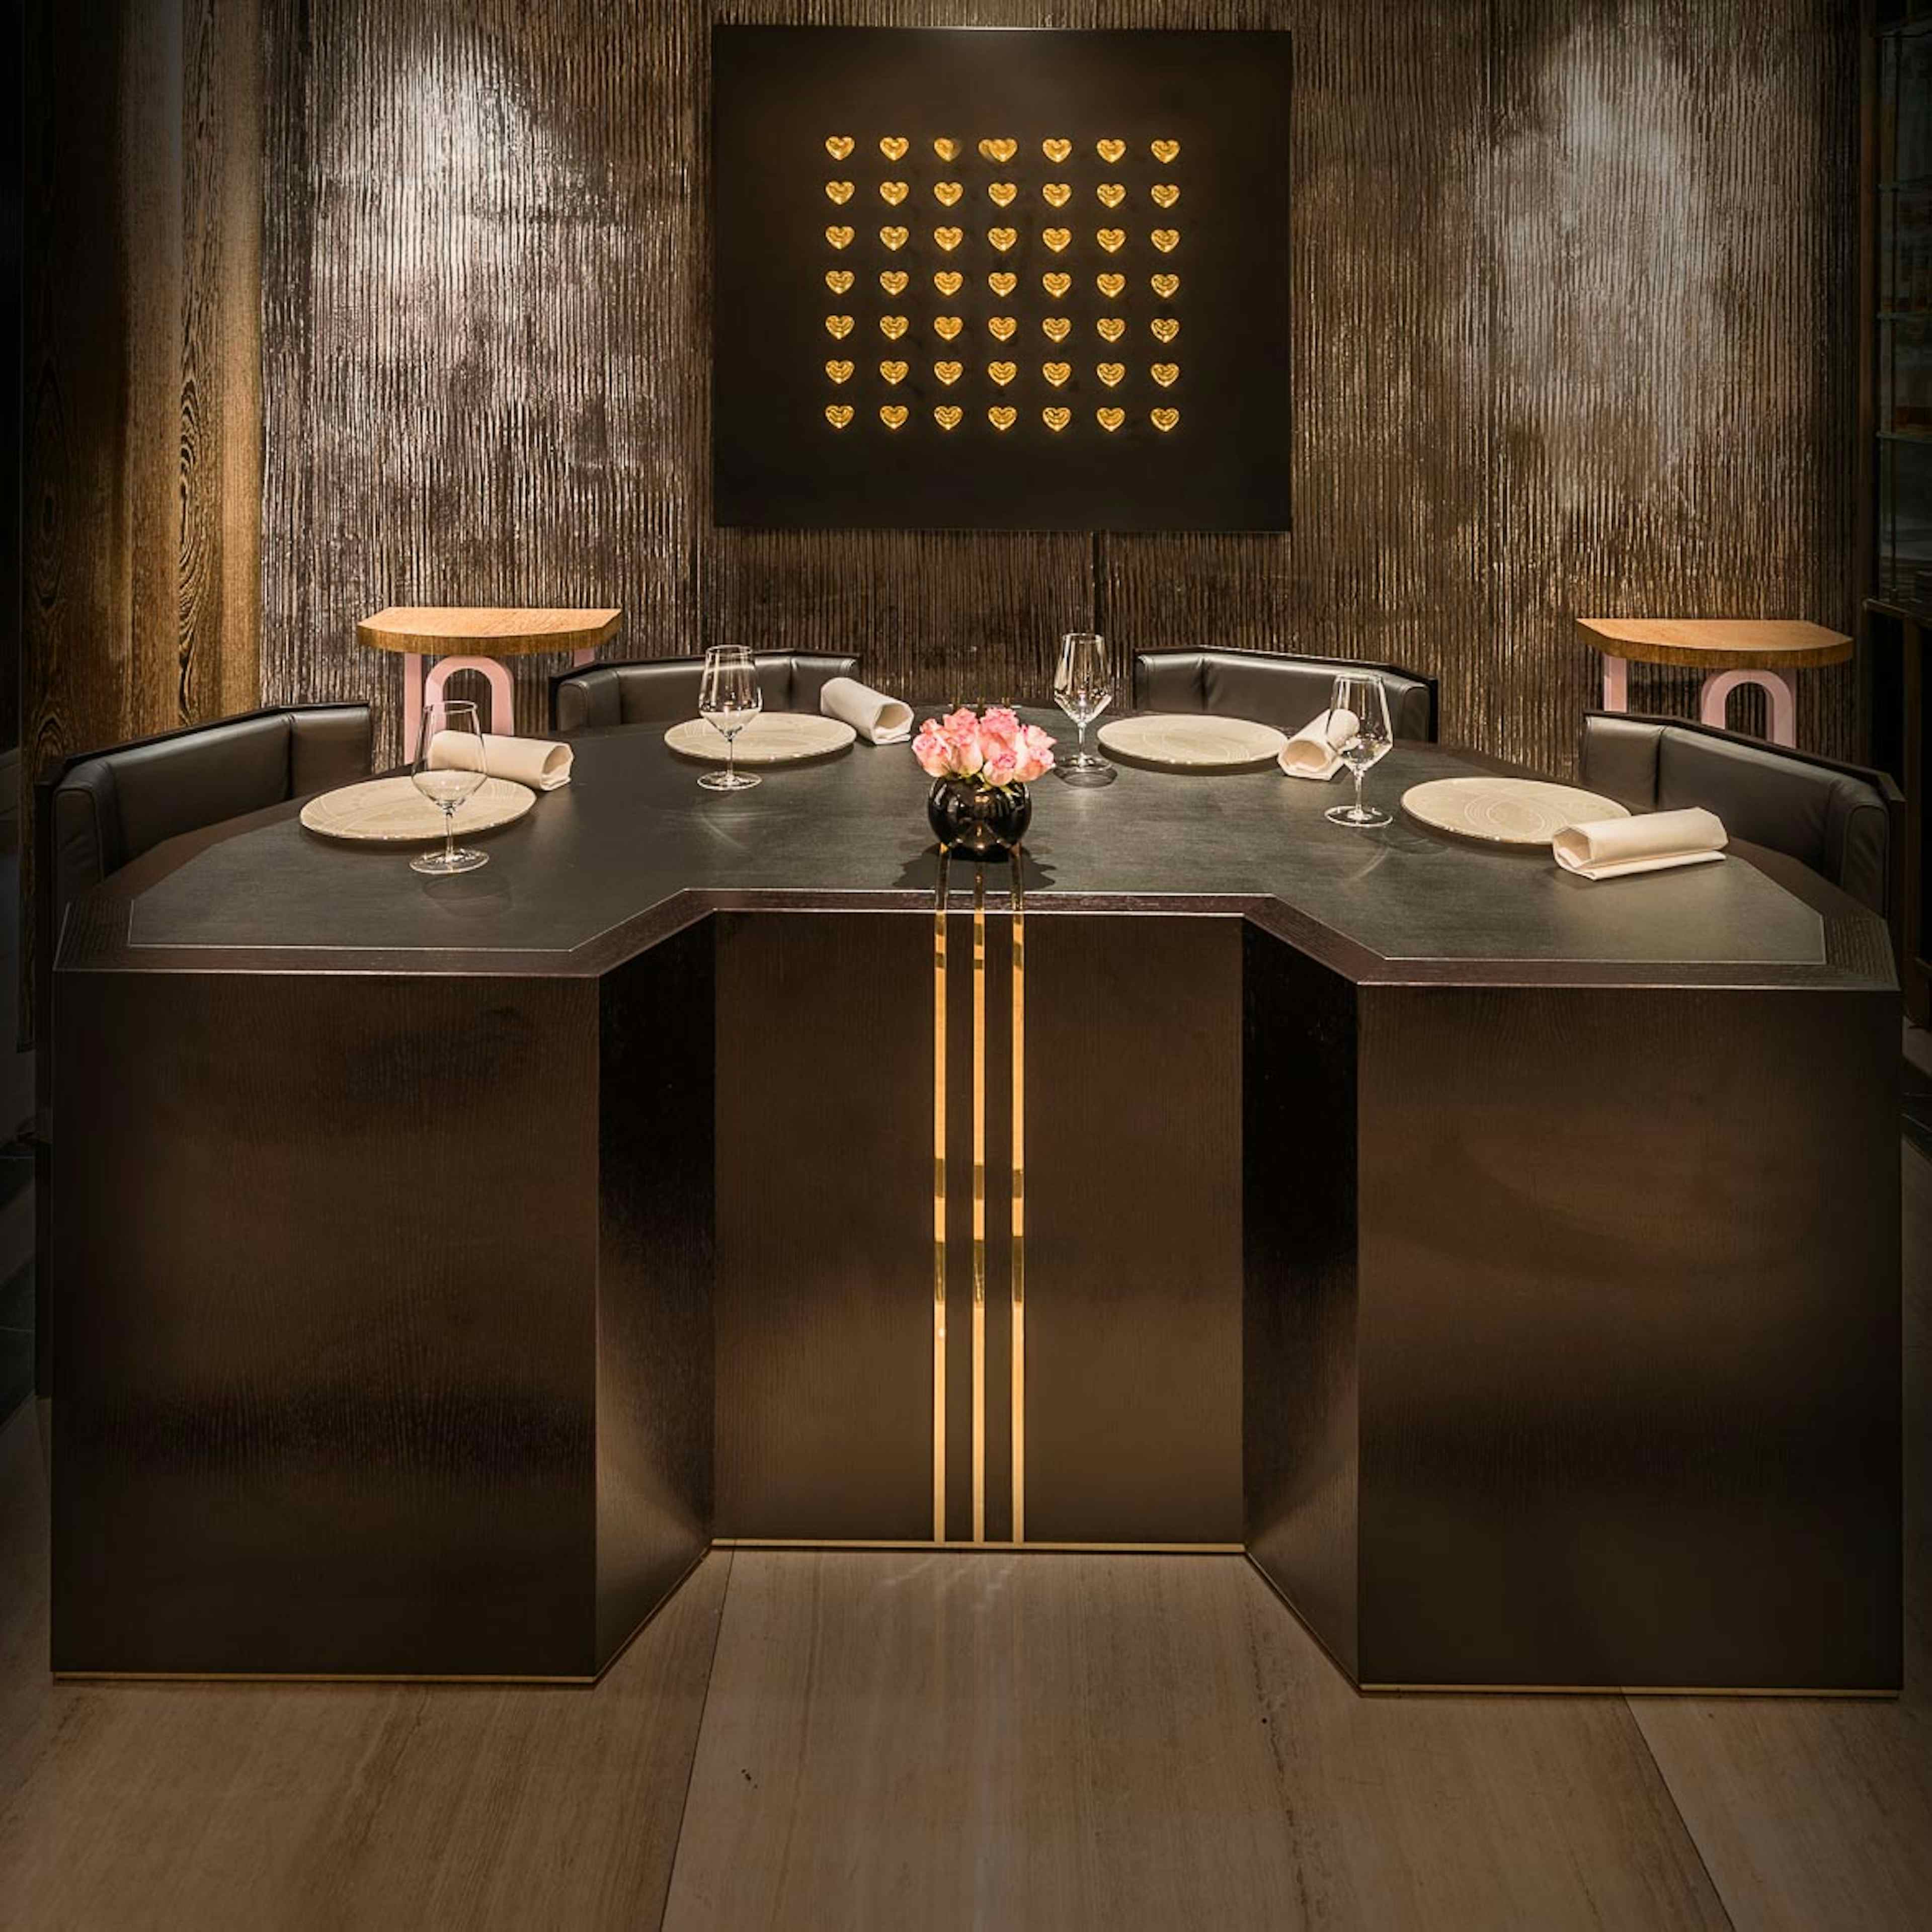 Restaurant Gordon Ramsay - Inspiration Table image 1